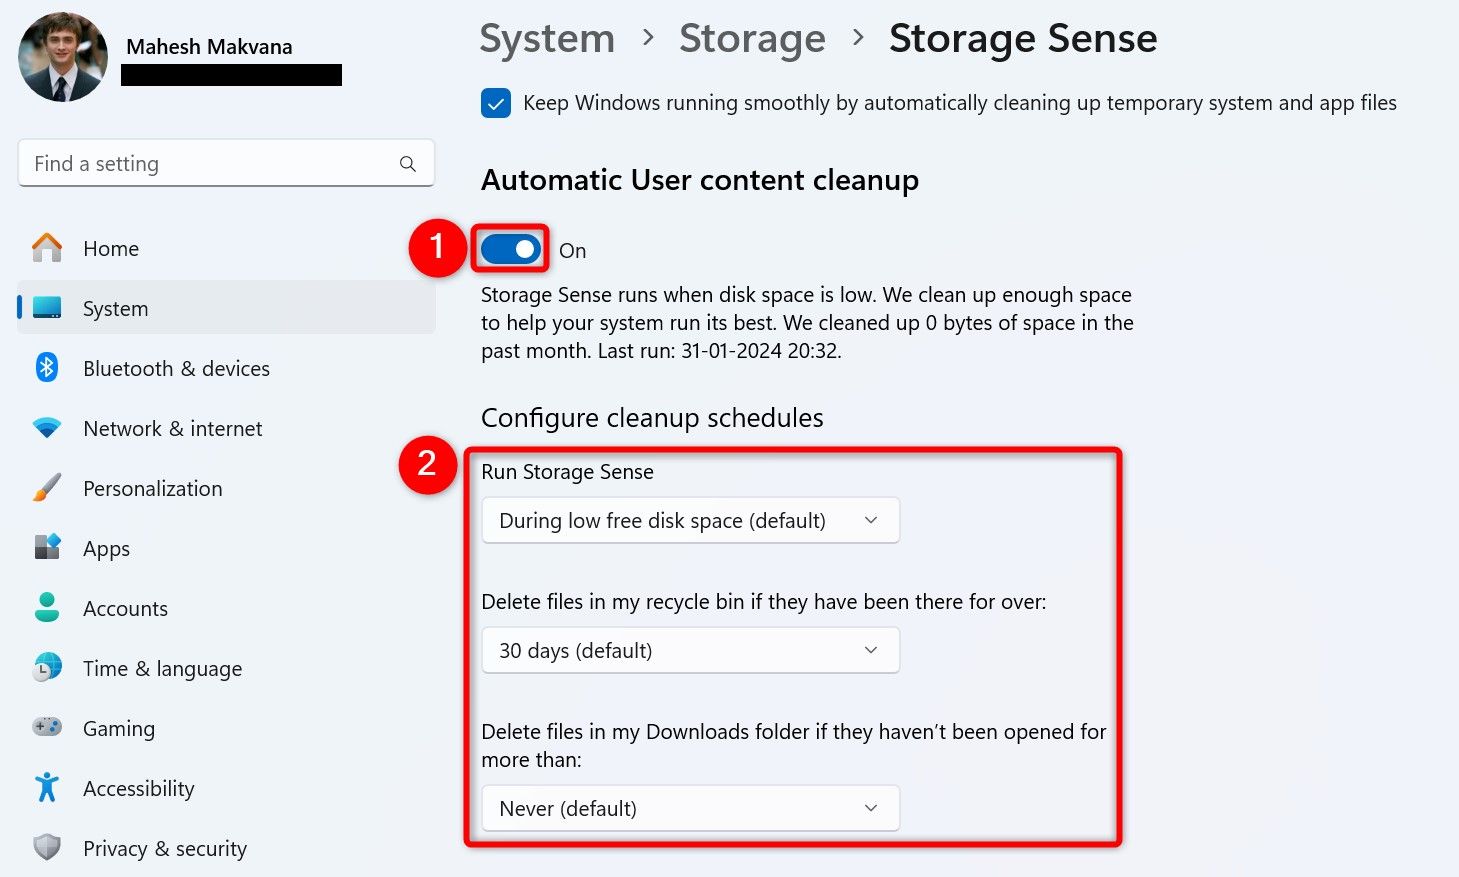 Storage Sense configuration options in Windows 11 Settings.